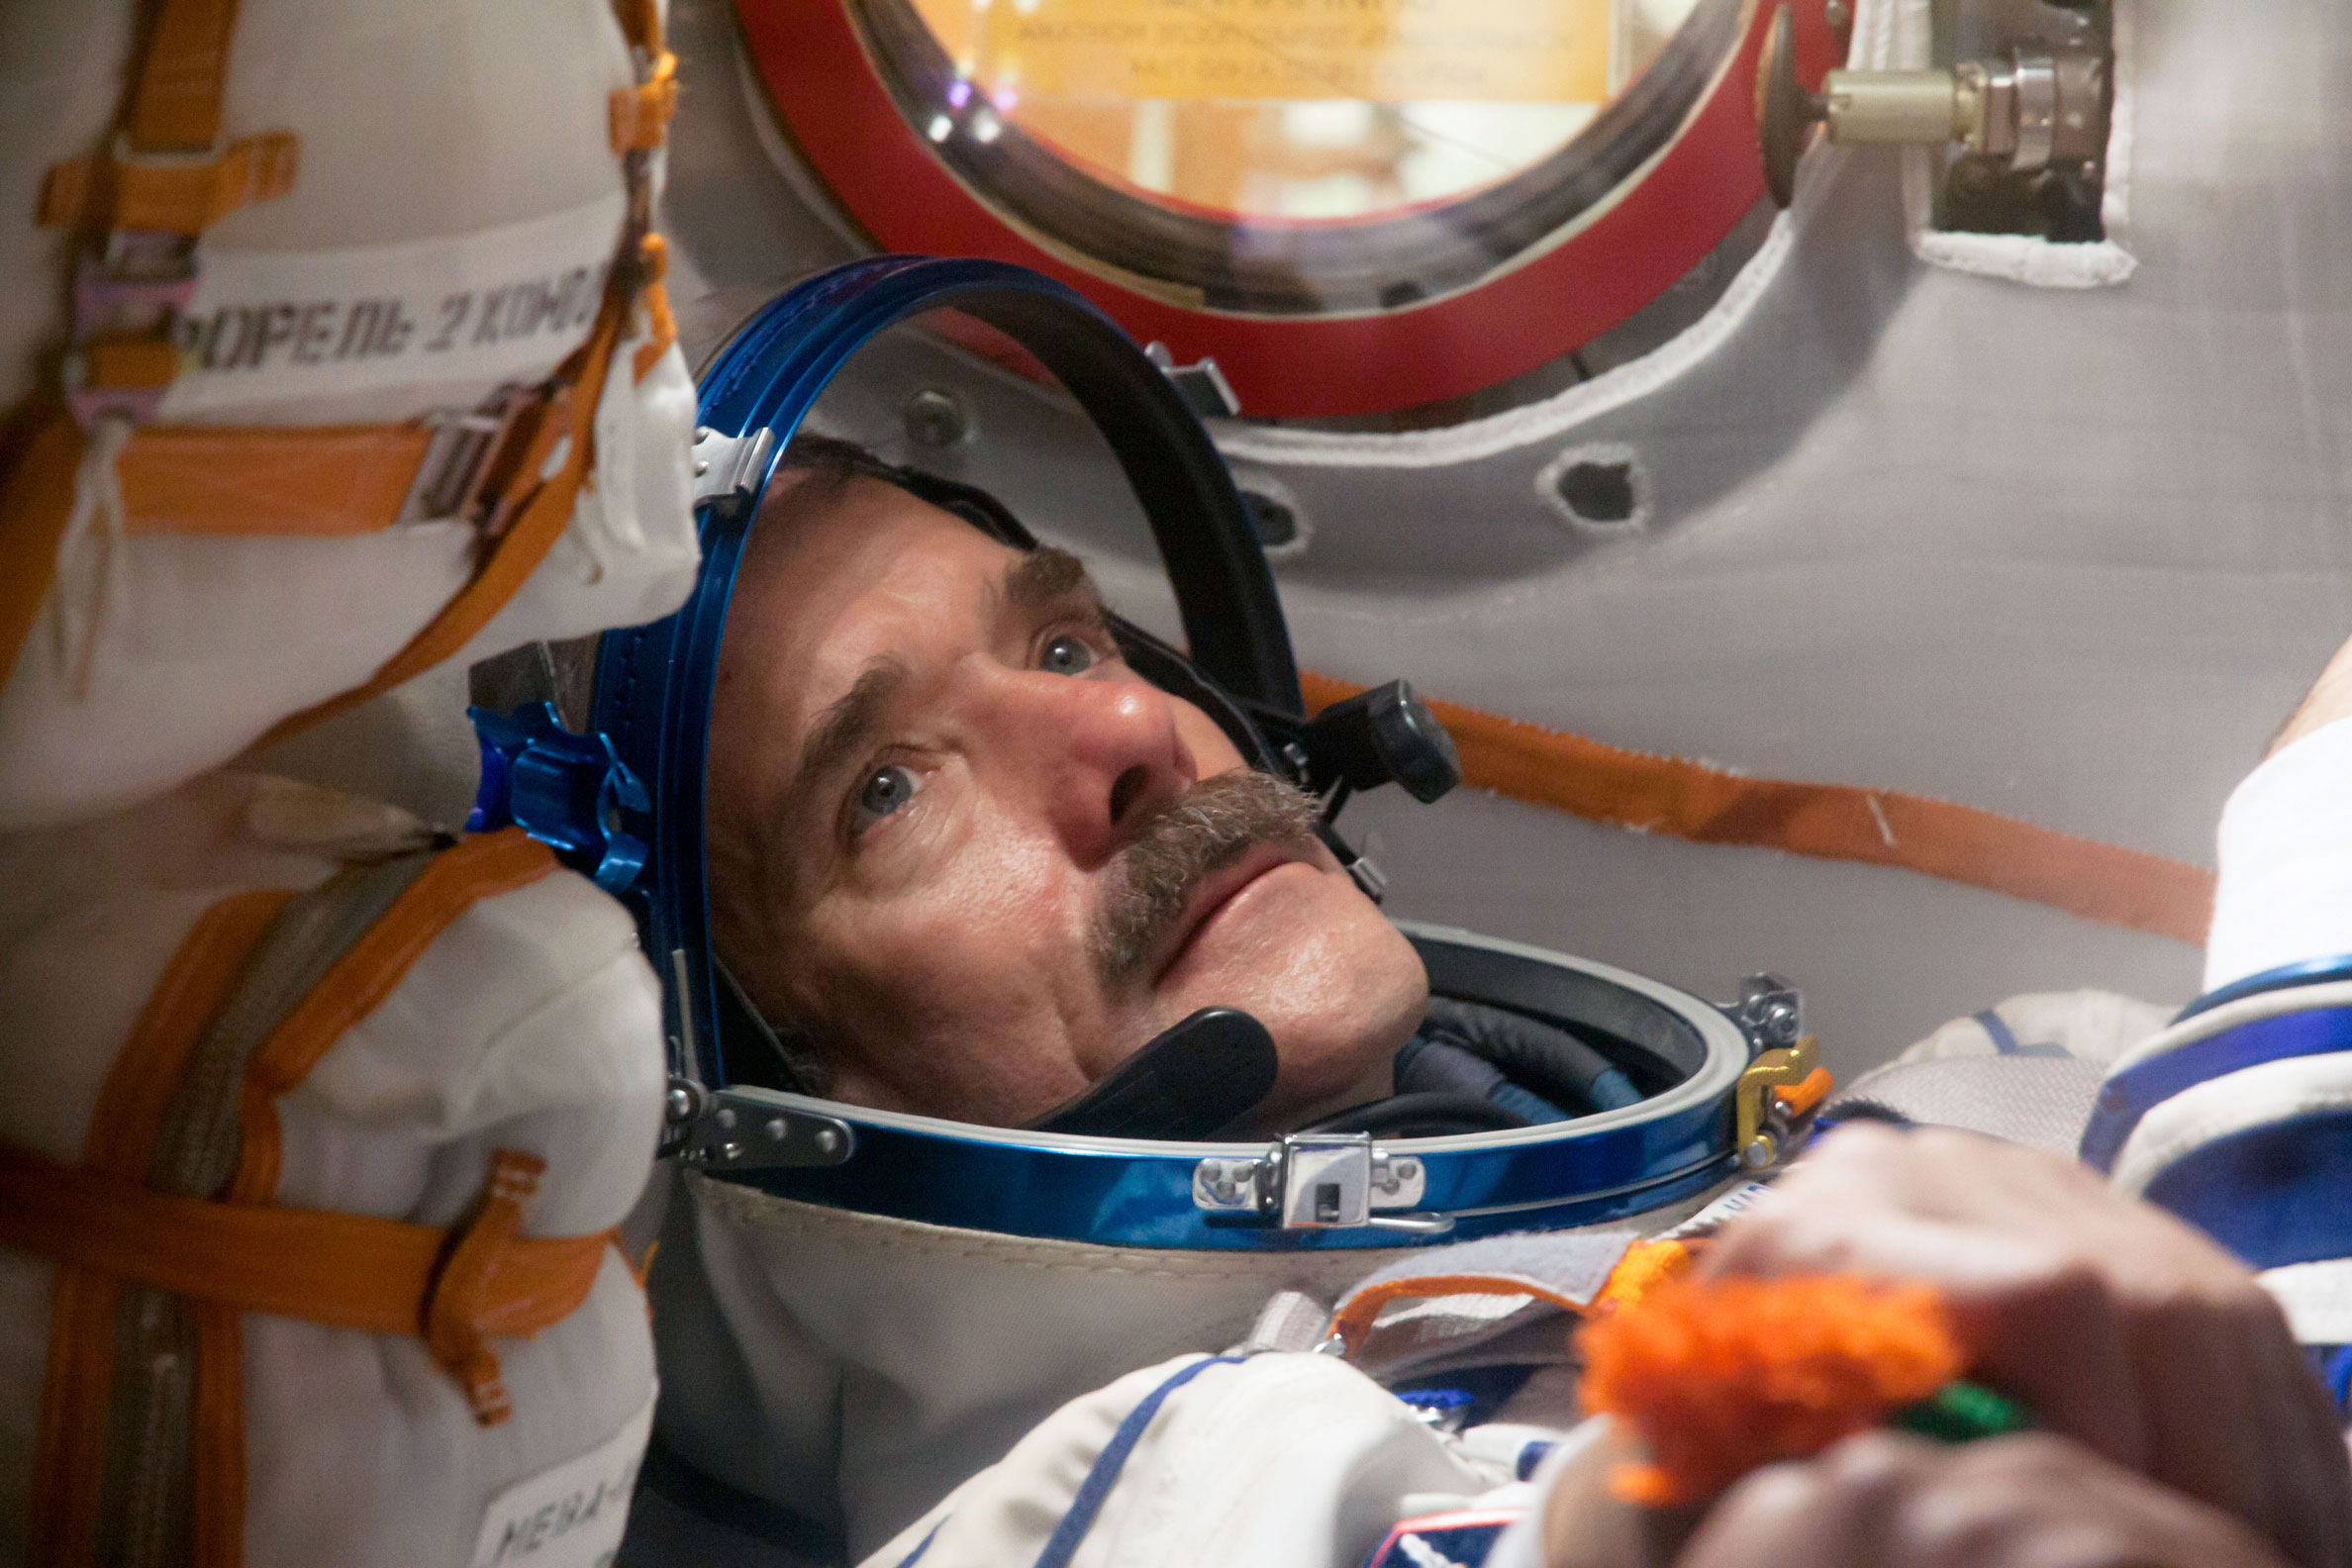 Astronaut Chris Hadfield. Credit: NASA/VICTOR ZELENTSOV